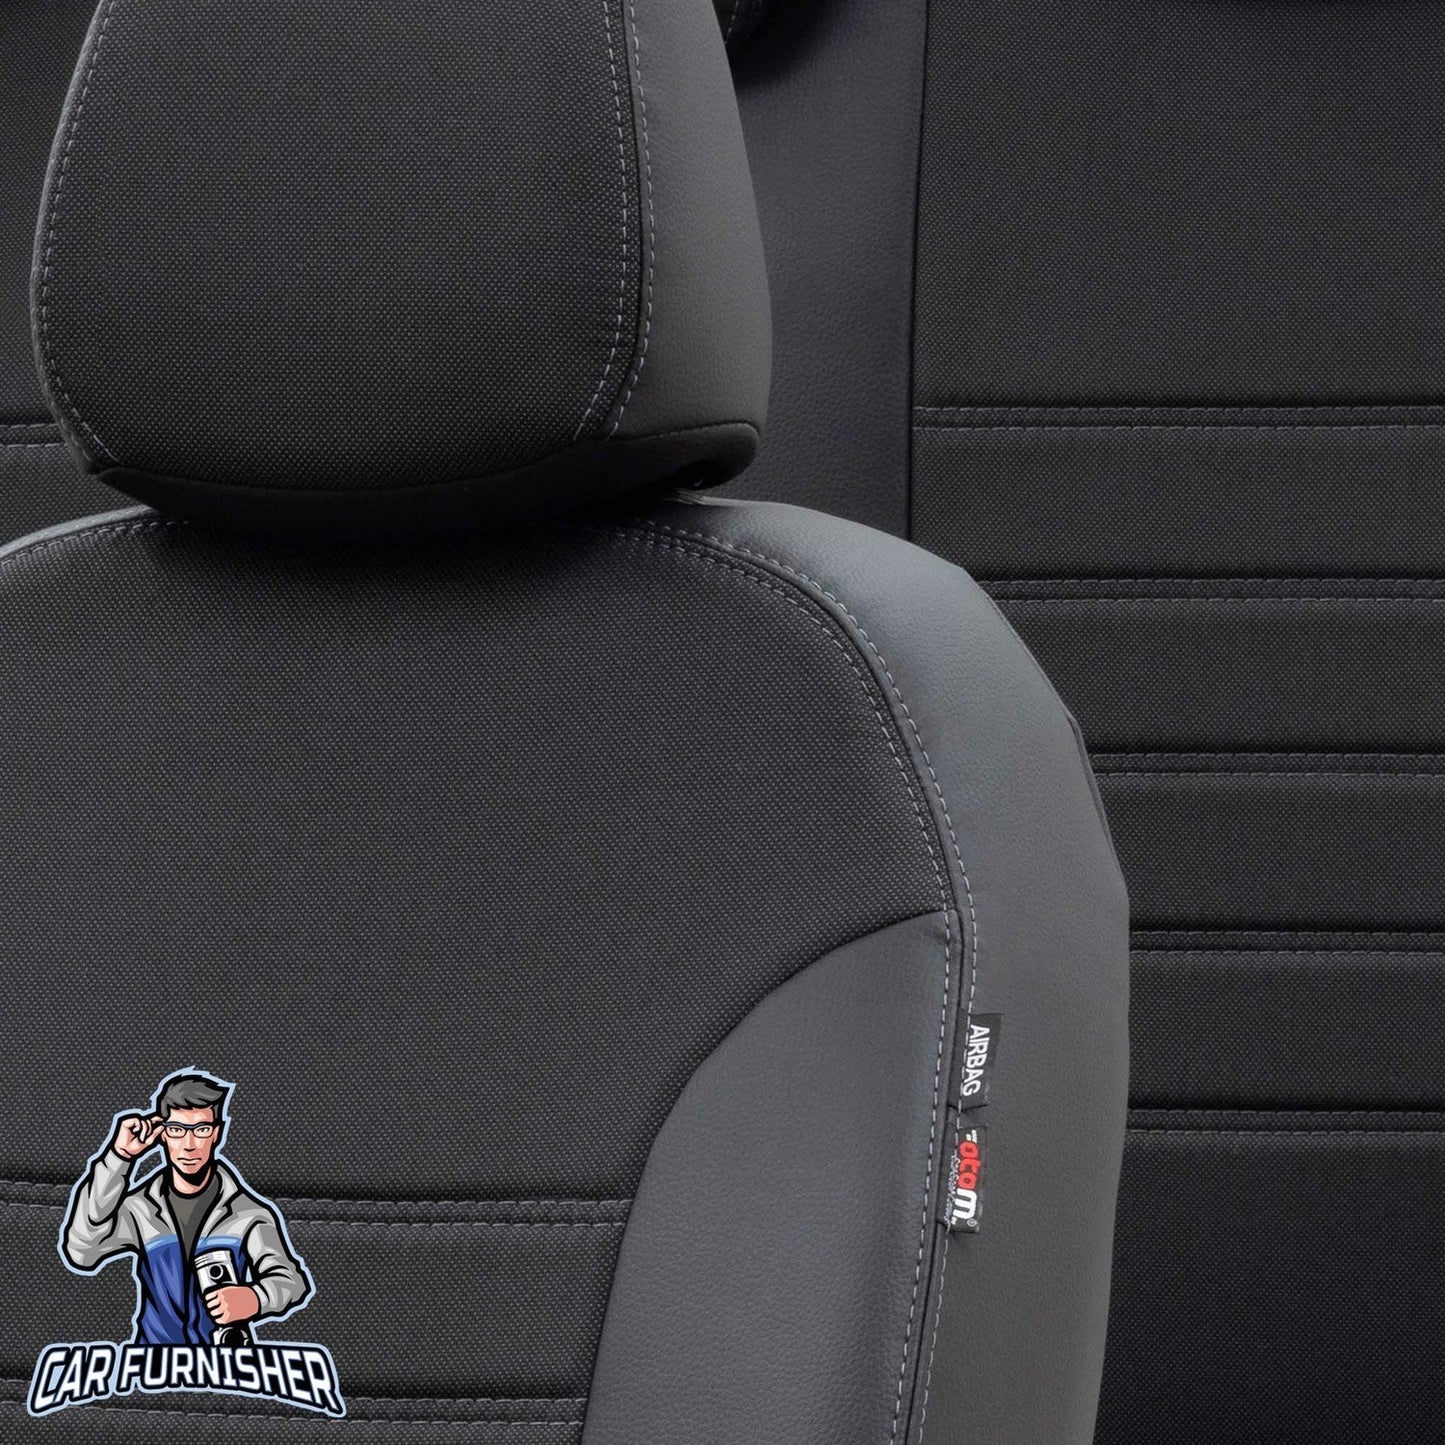 Fiat Marea Seat Covers Paris Leather & Jacquard Design Black Leather & Jacquard Fabric